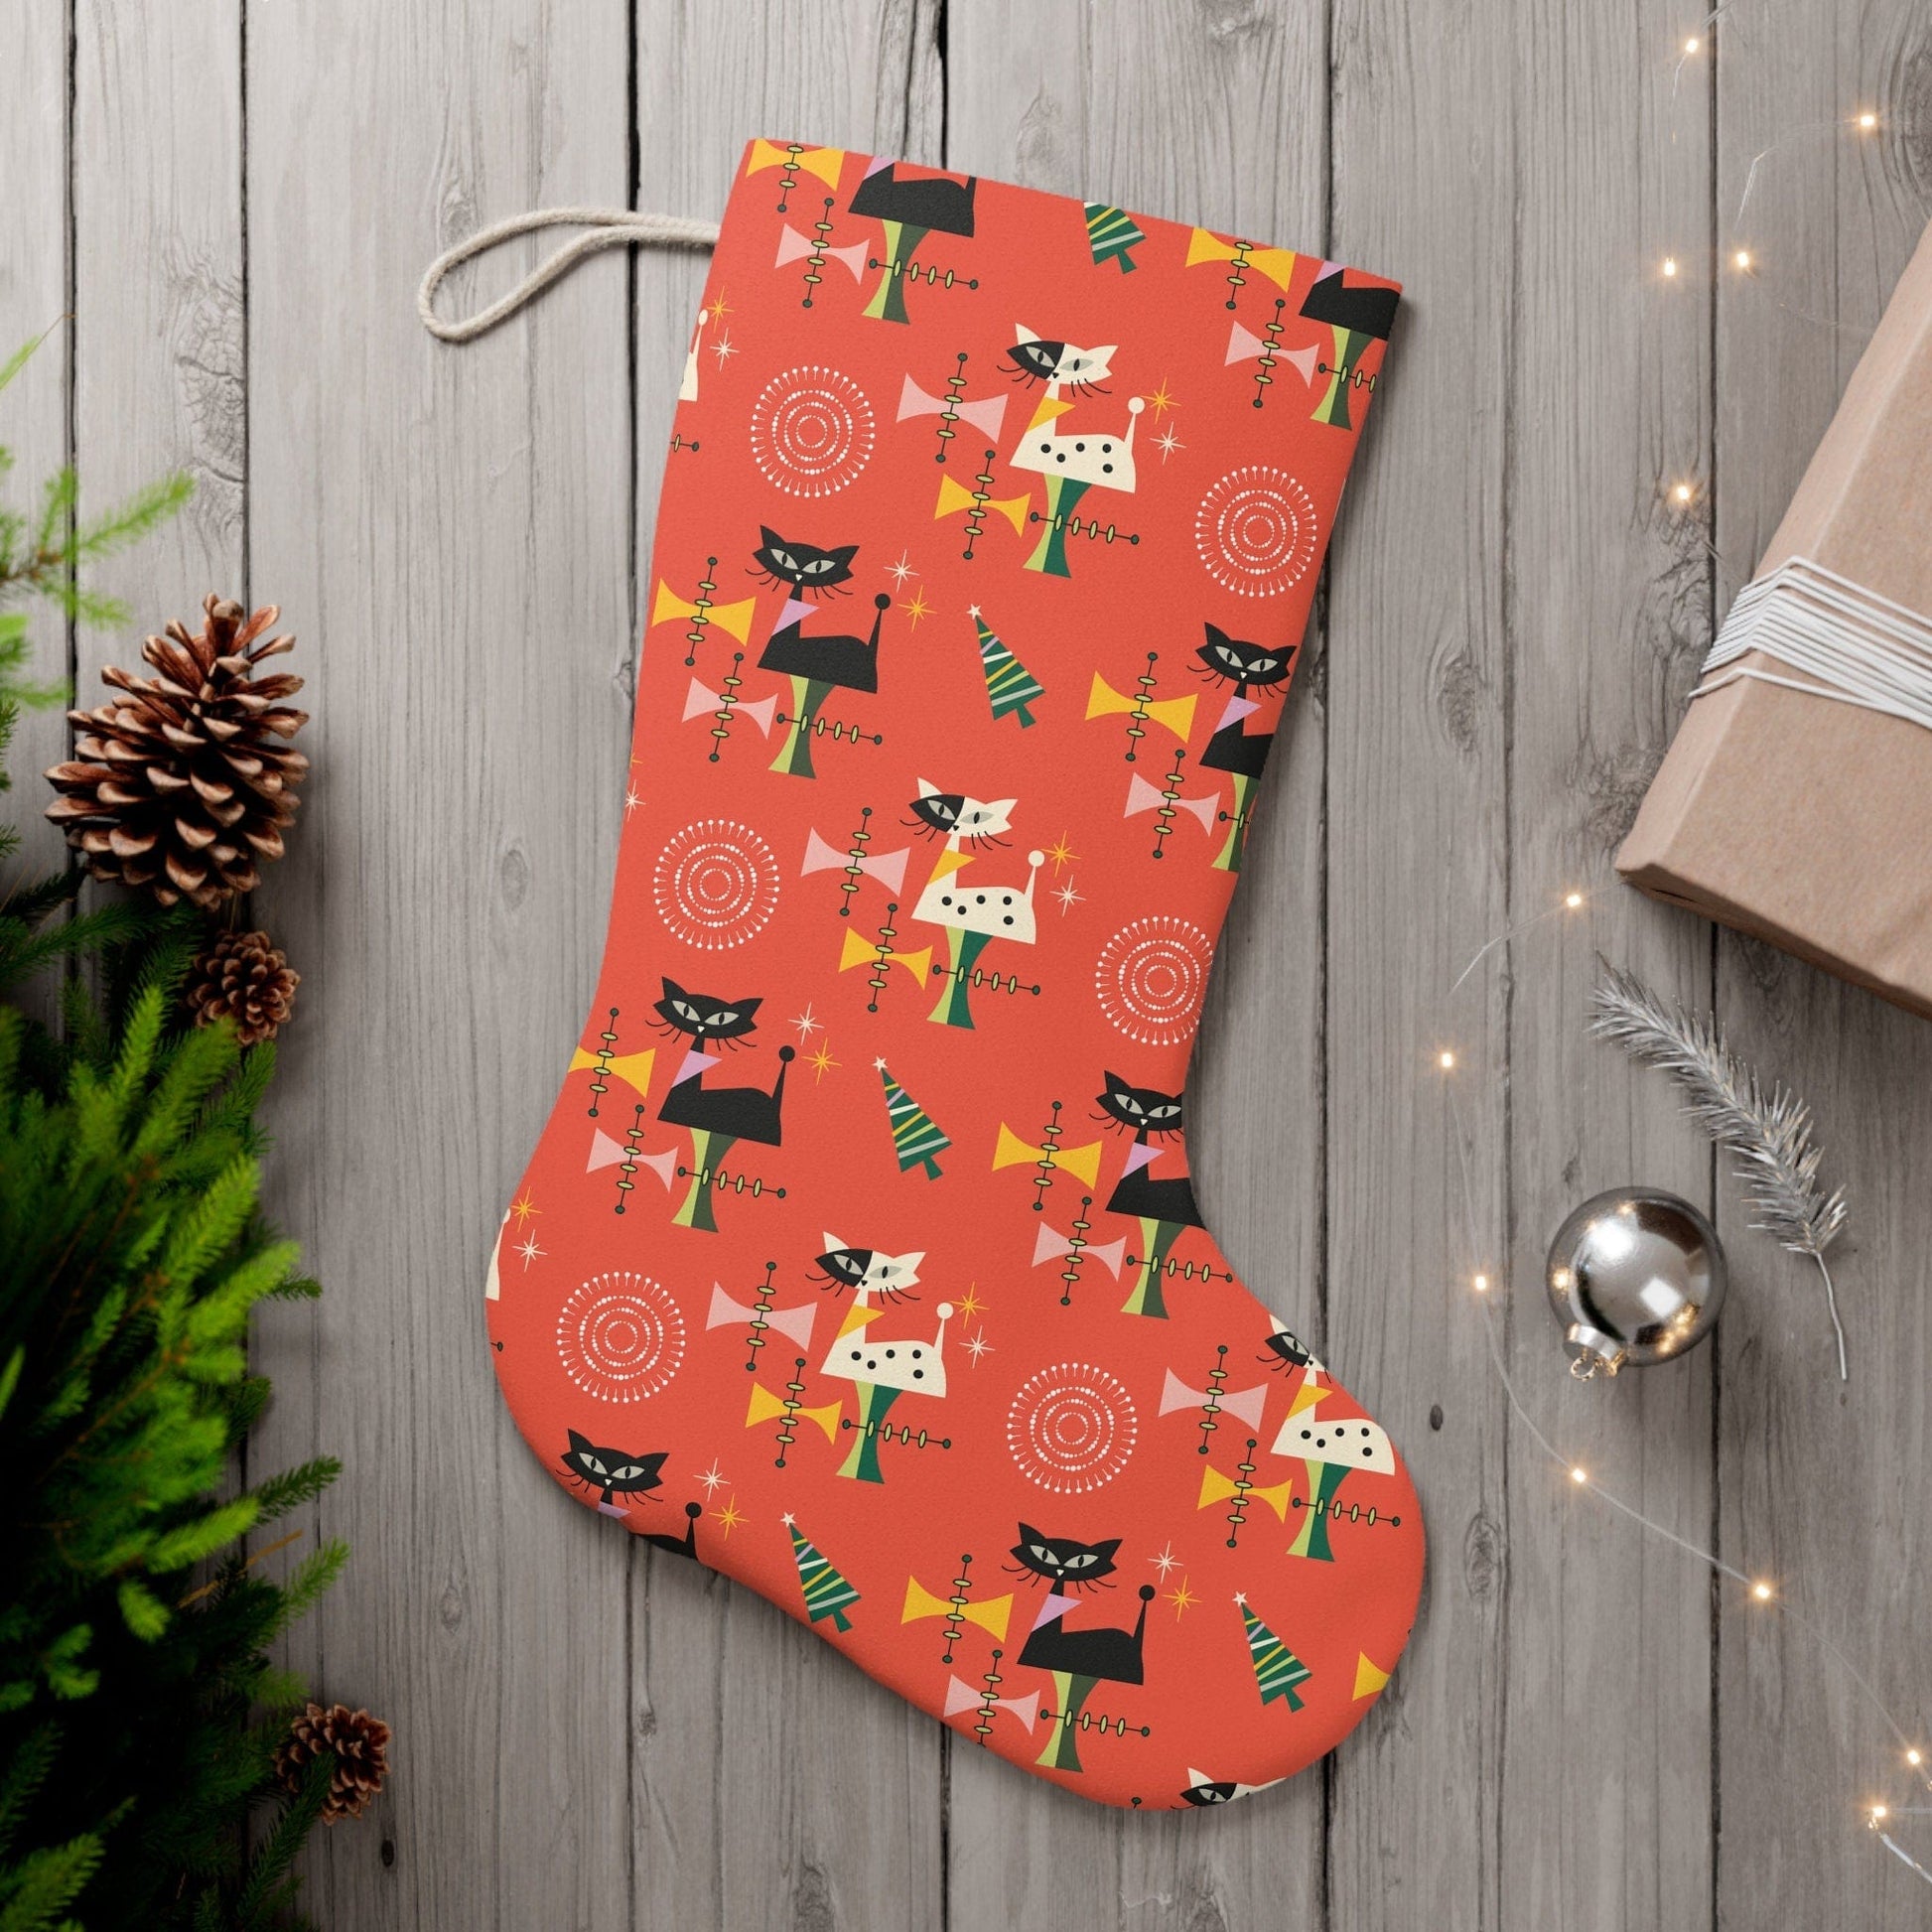 Kate McEnroe New York Atomic Cat Santa Stocking, Retro Starburst Christmas Decor, 1950s Vintage style Christmas Stockings Holiday Stockings 30325225707929718430